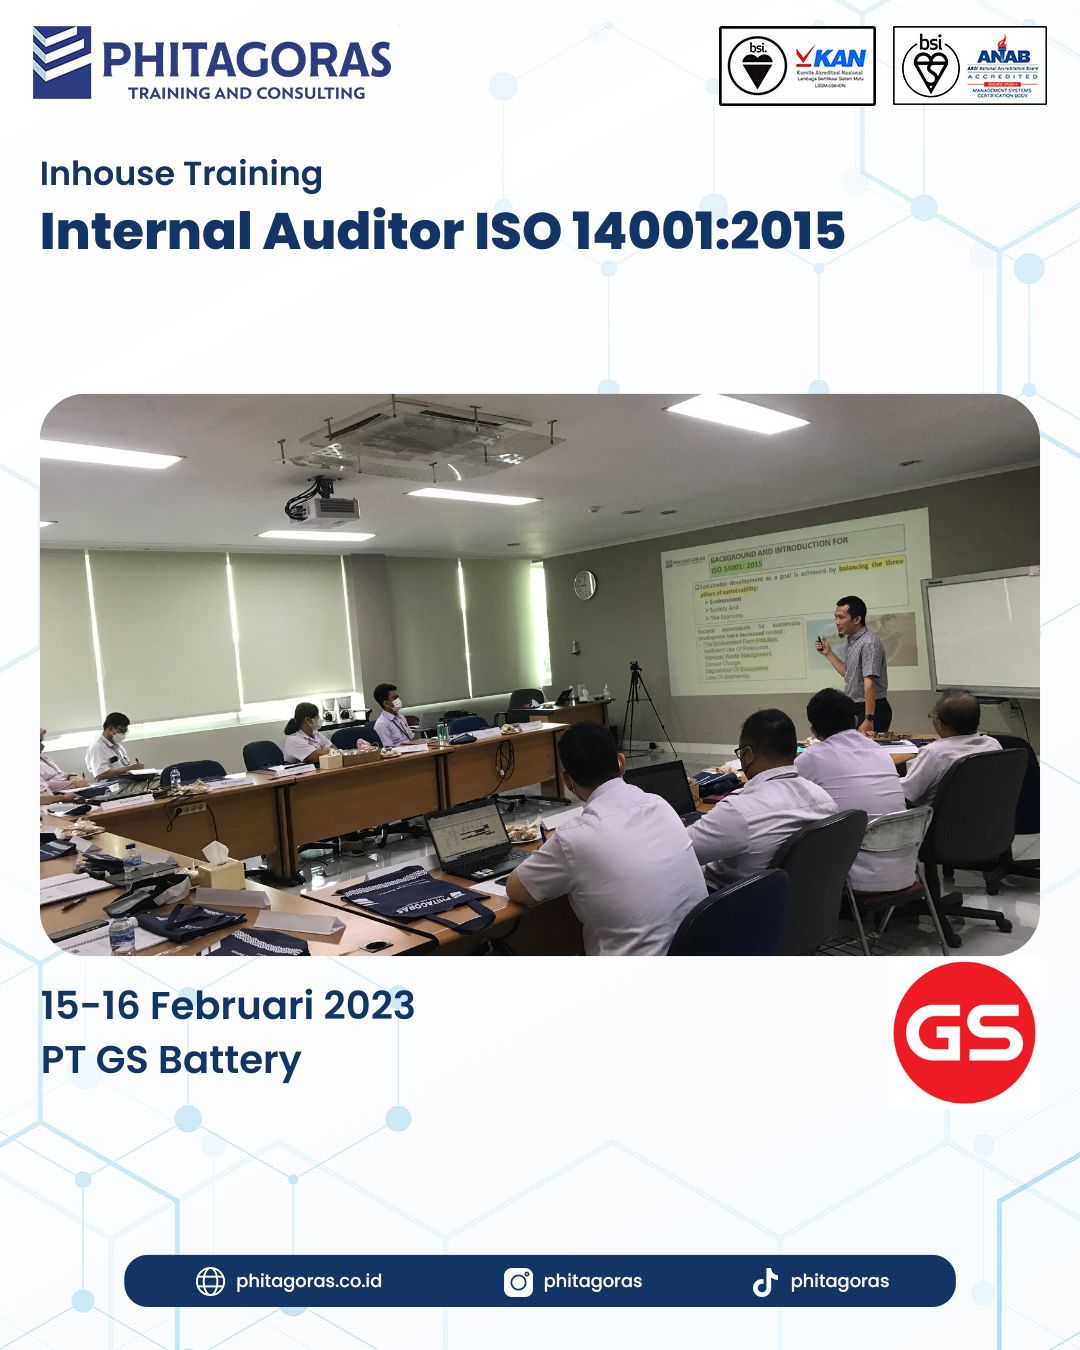 Inhouse Training Internal Auditor ISO 14001:2015 - PT GS Battery